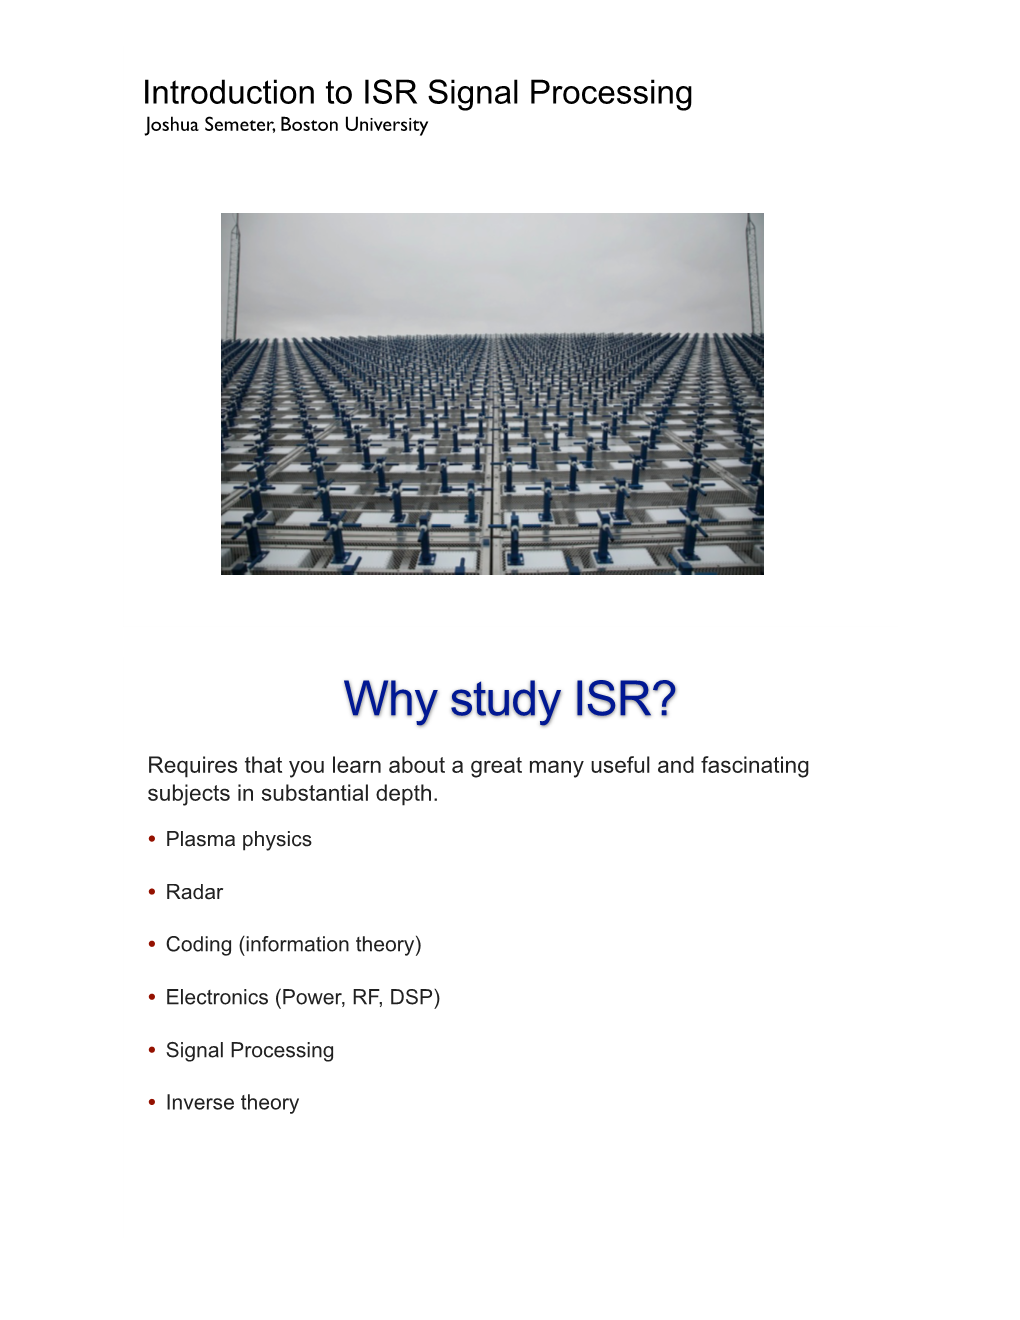 Why Study ISR?